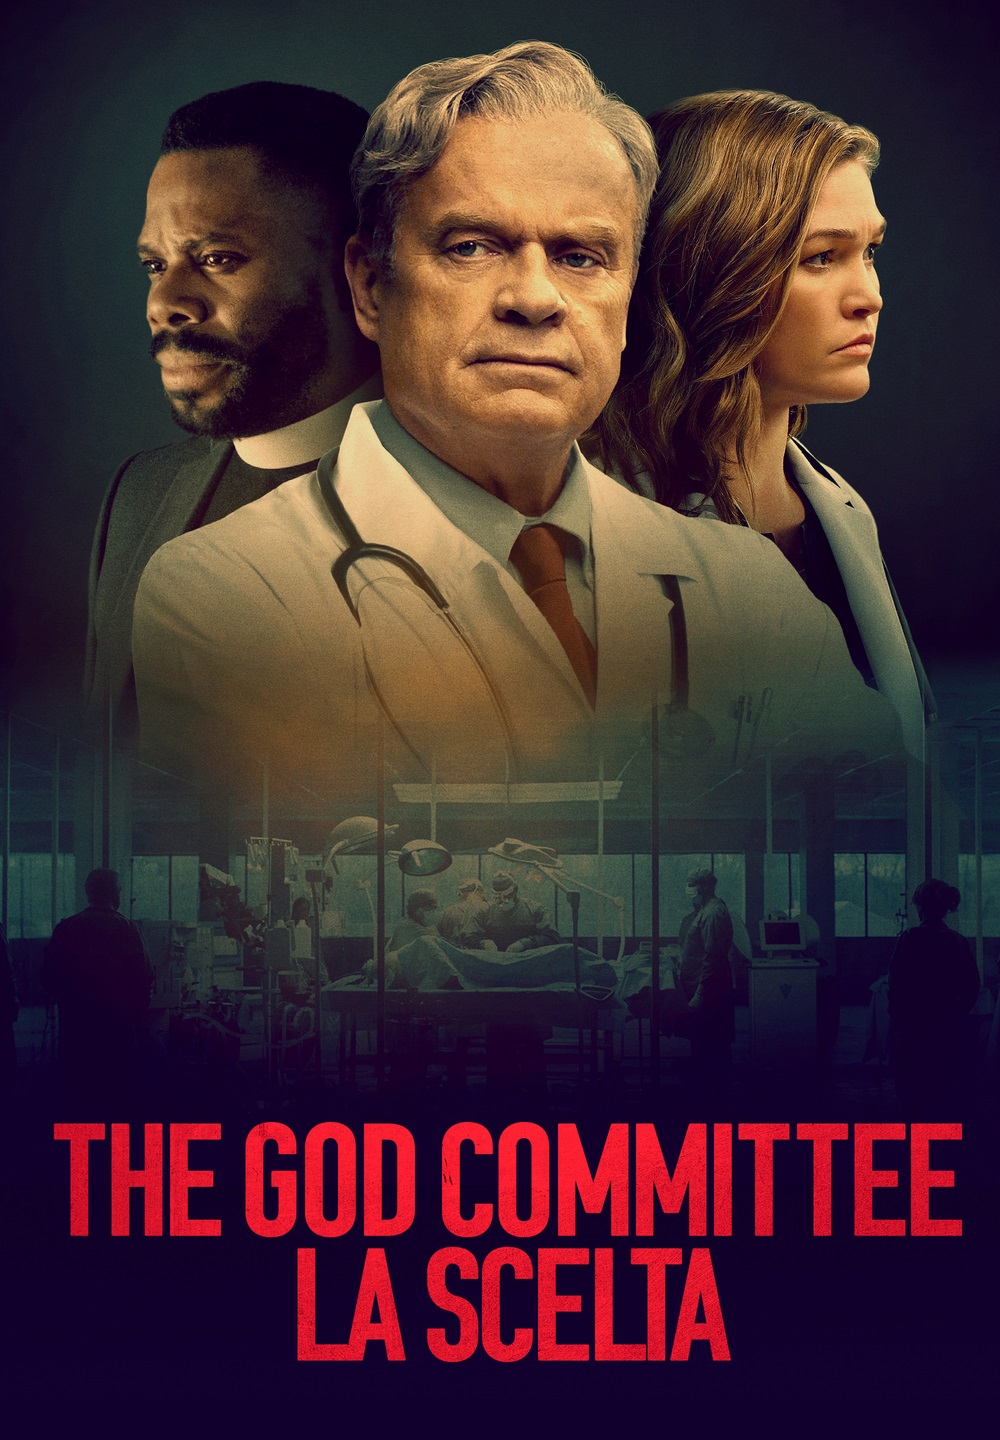 The God Committee – La scelta [HD] (2021)